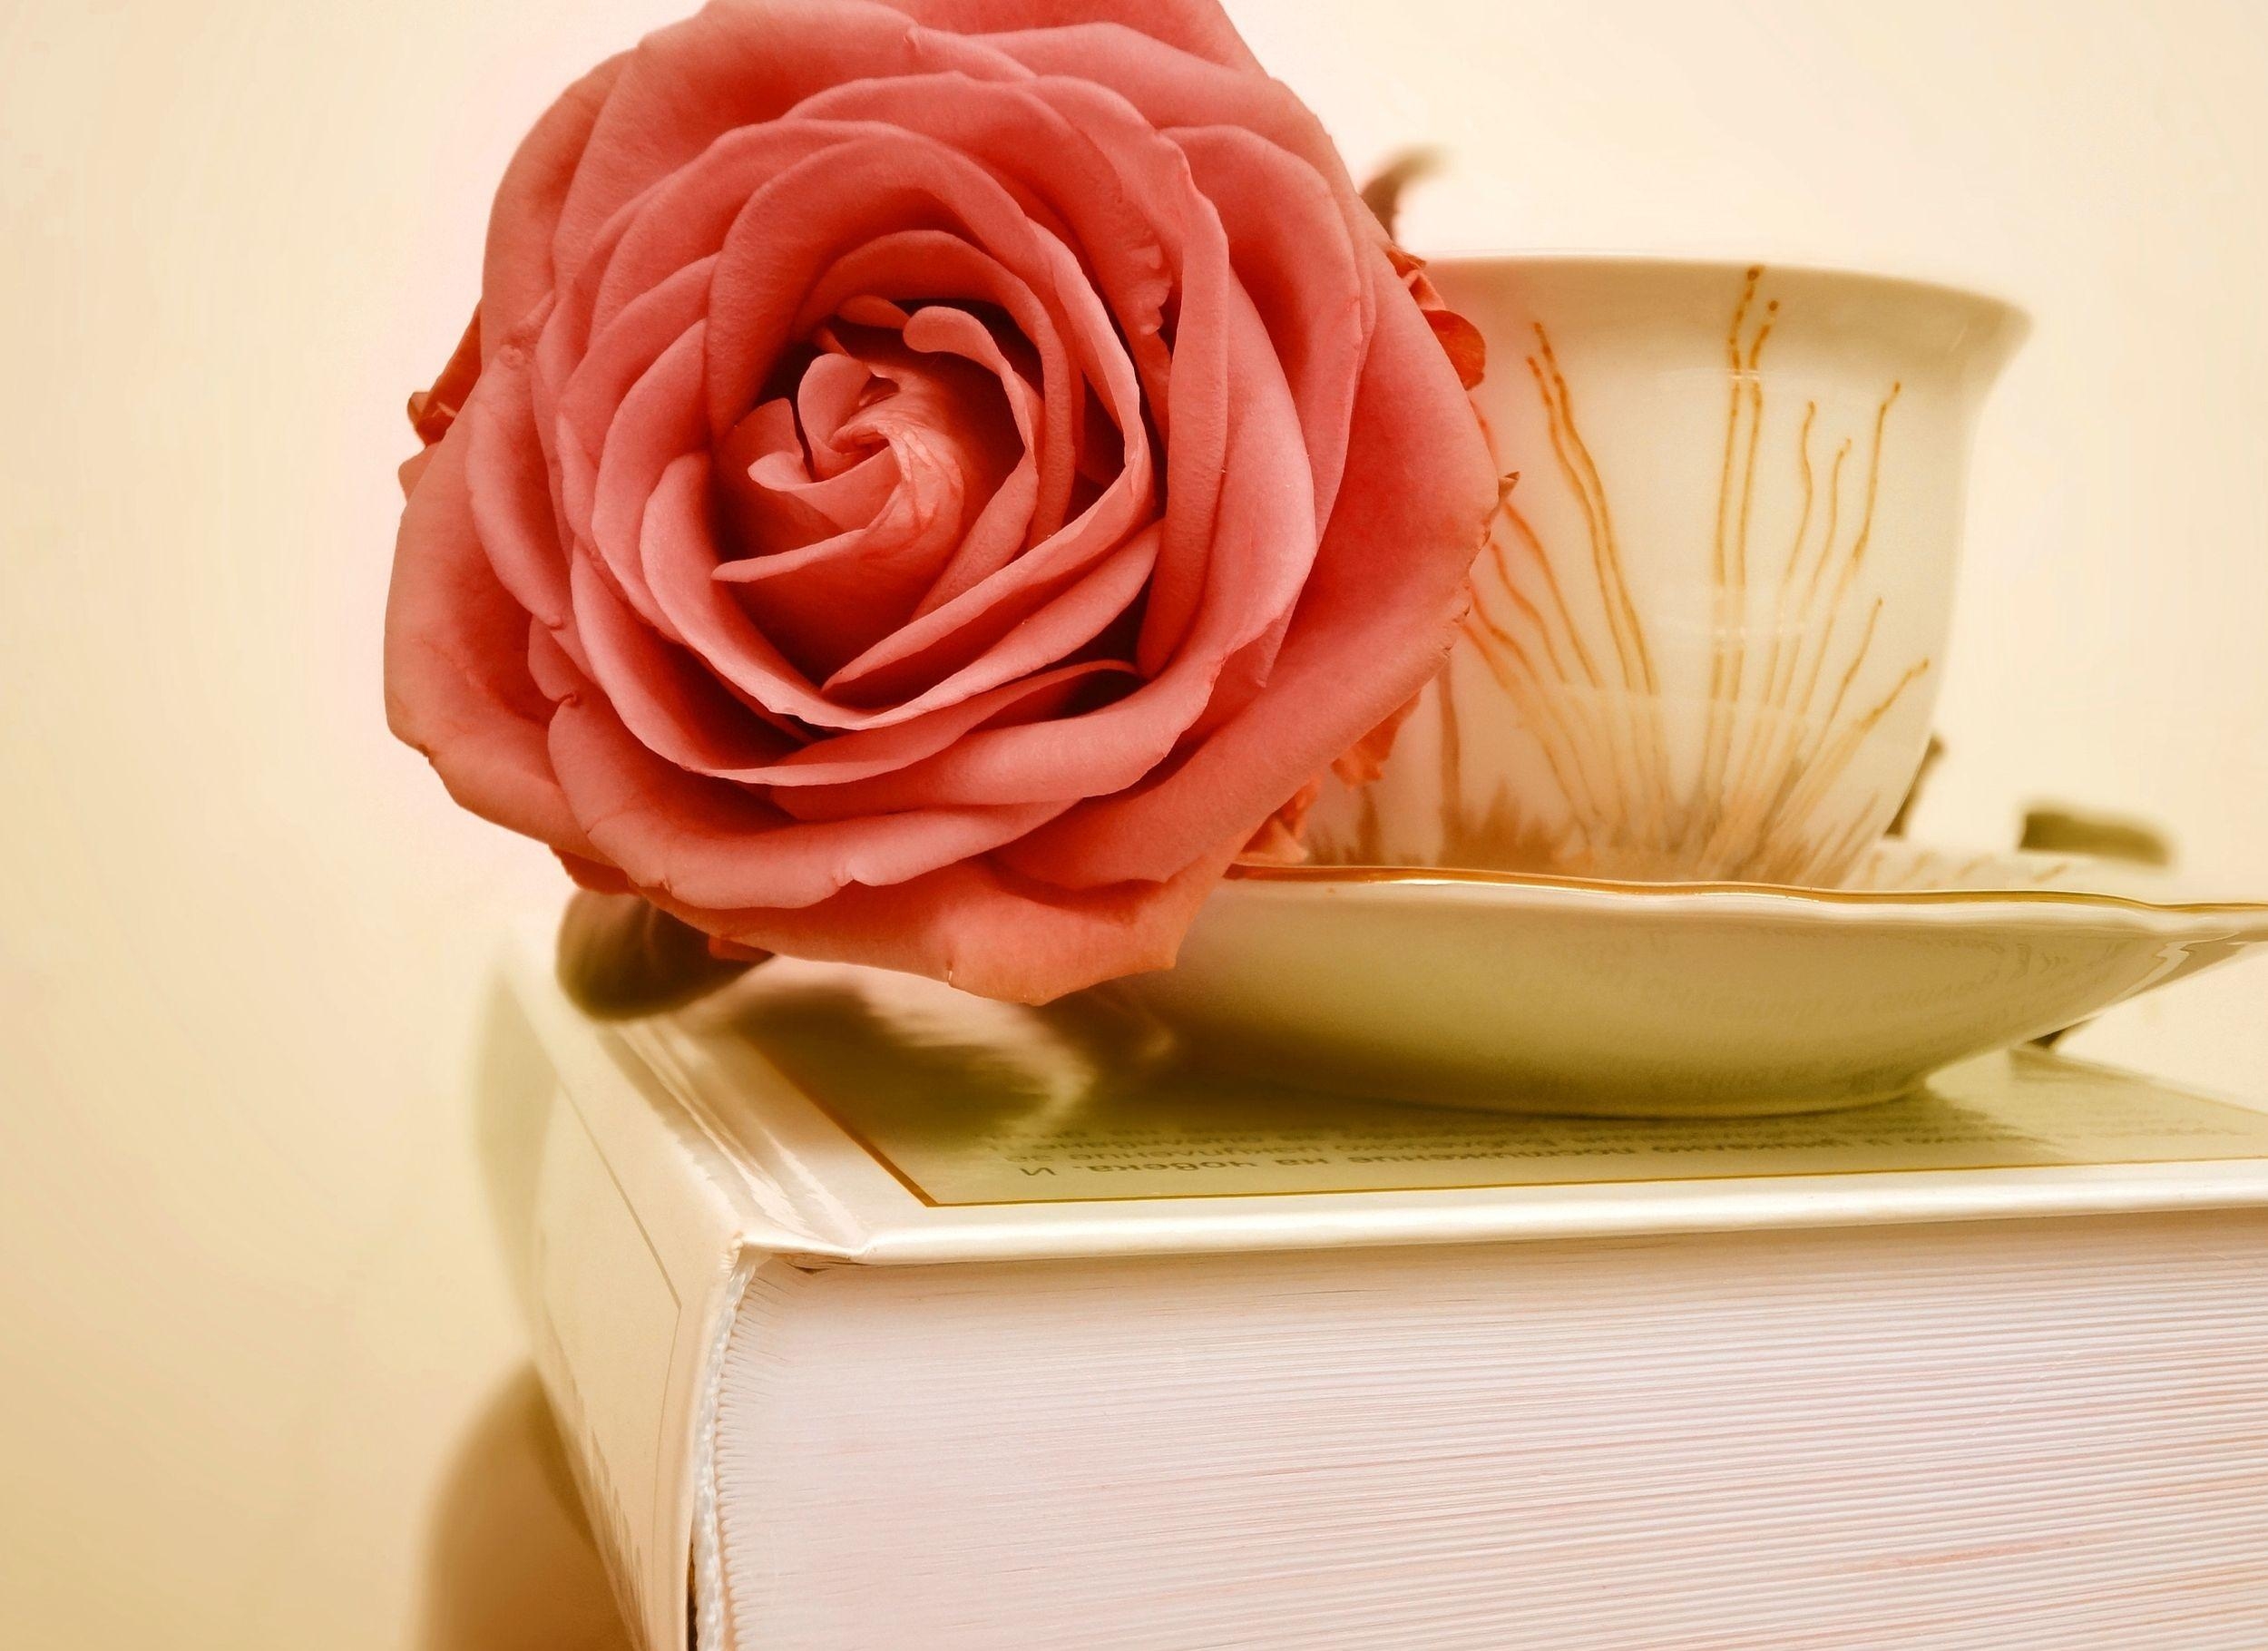 flowers, flower, rose flower, rose, bud, cup, book